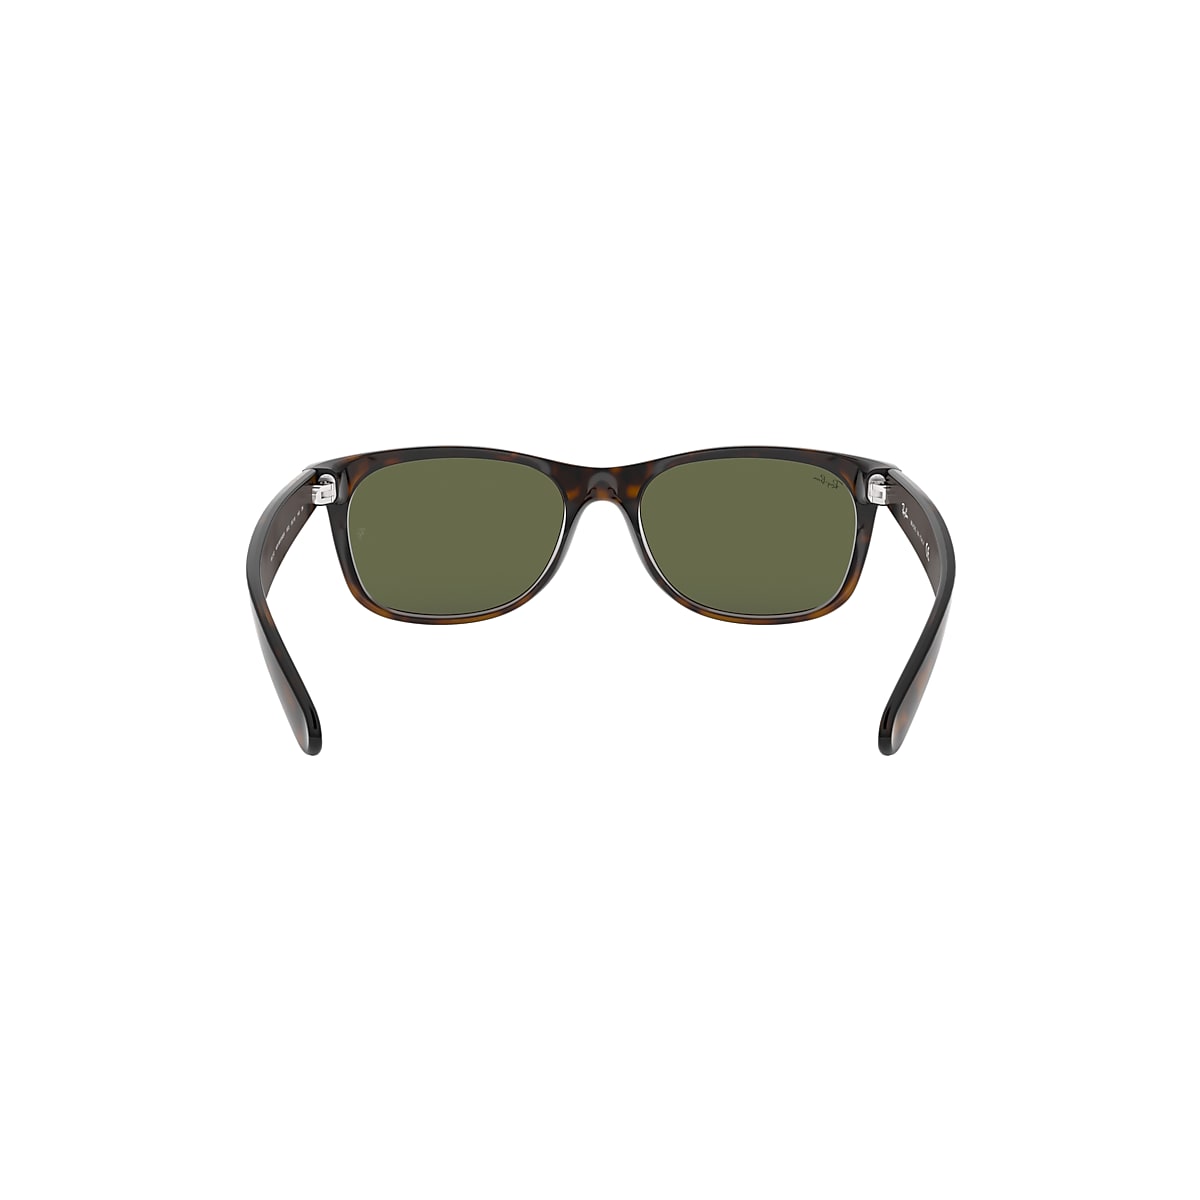 NEW WAYFARER CLASSIC Sunglasses in Tortoise and Green - RB2132